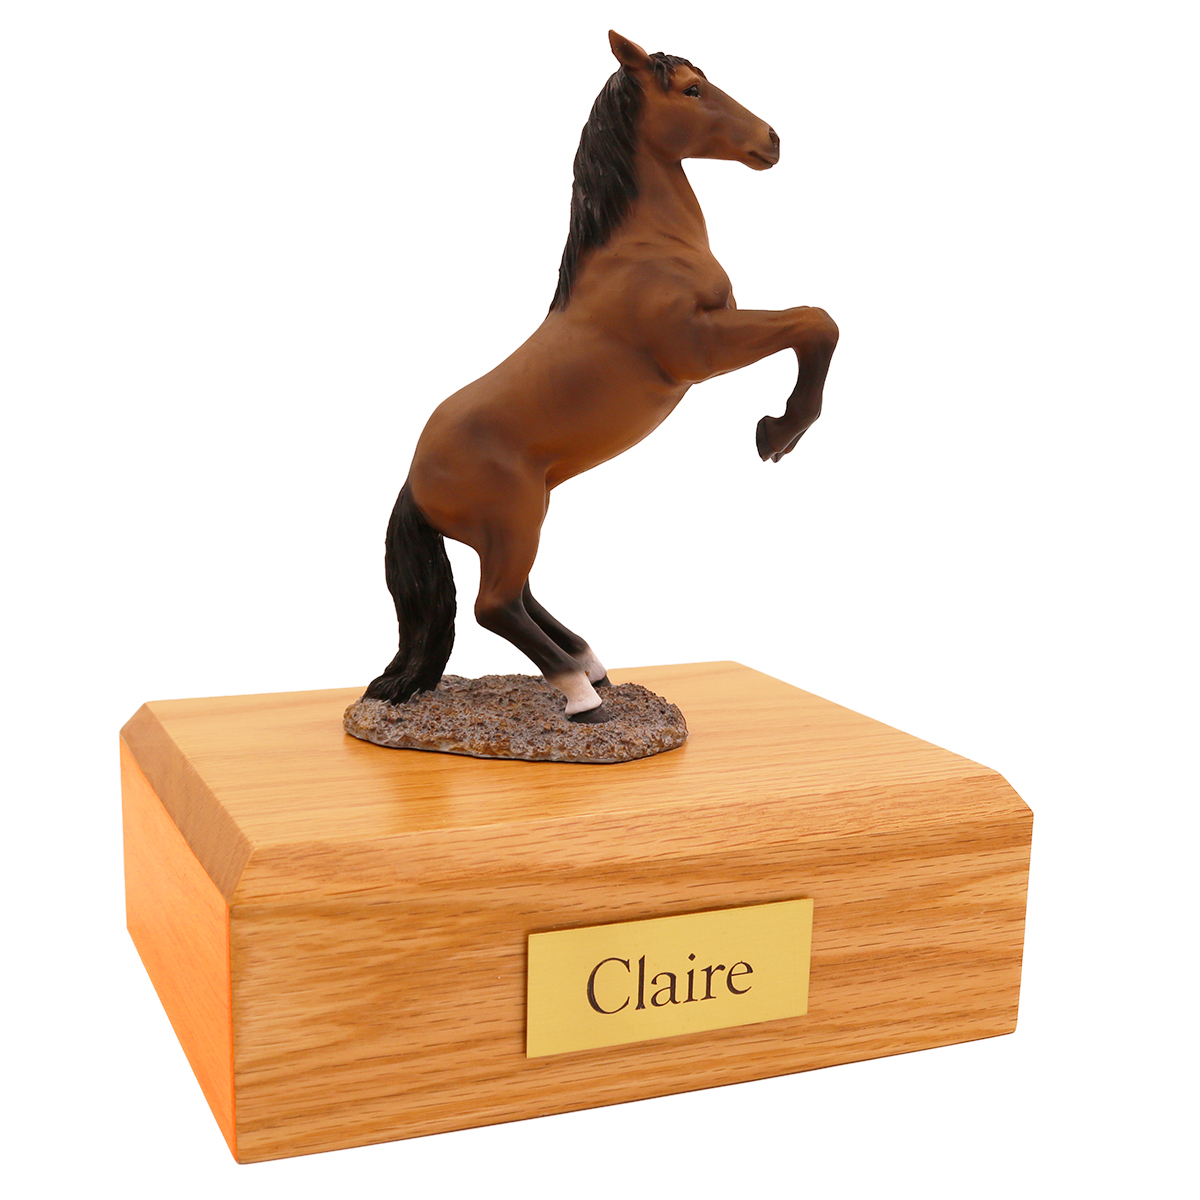 Horse, Bay, Rearing - Figurine Urn